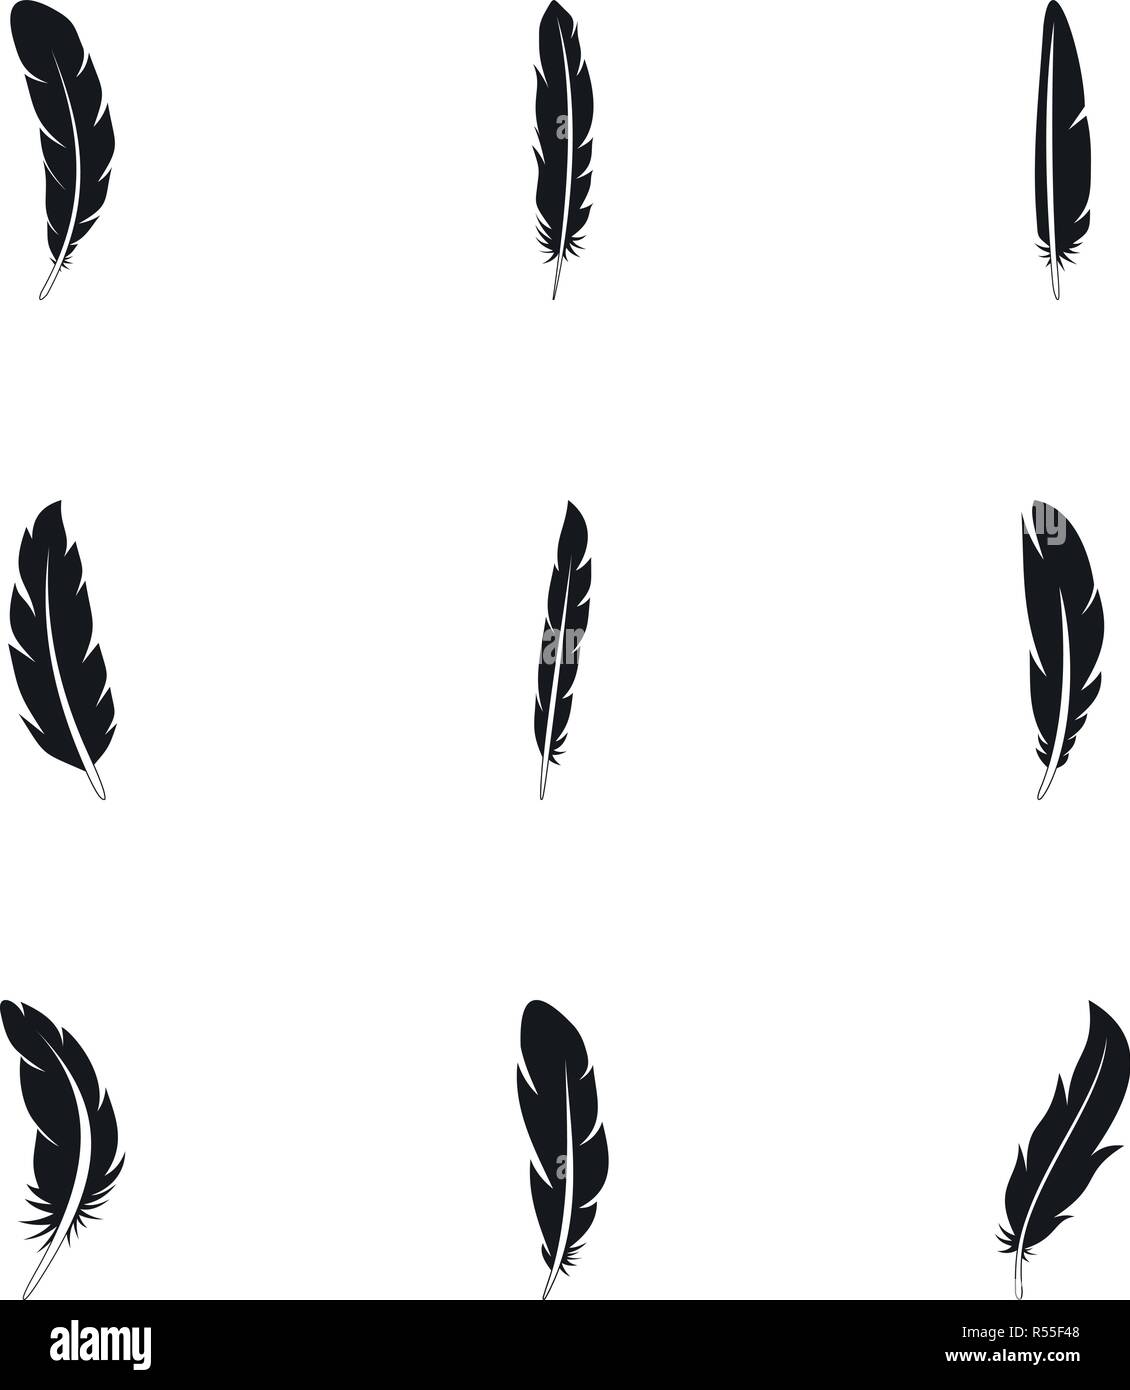 Black feather icon - Free black feather icons